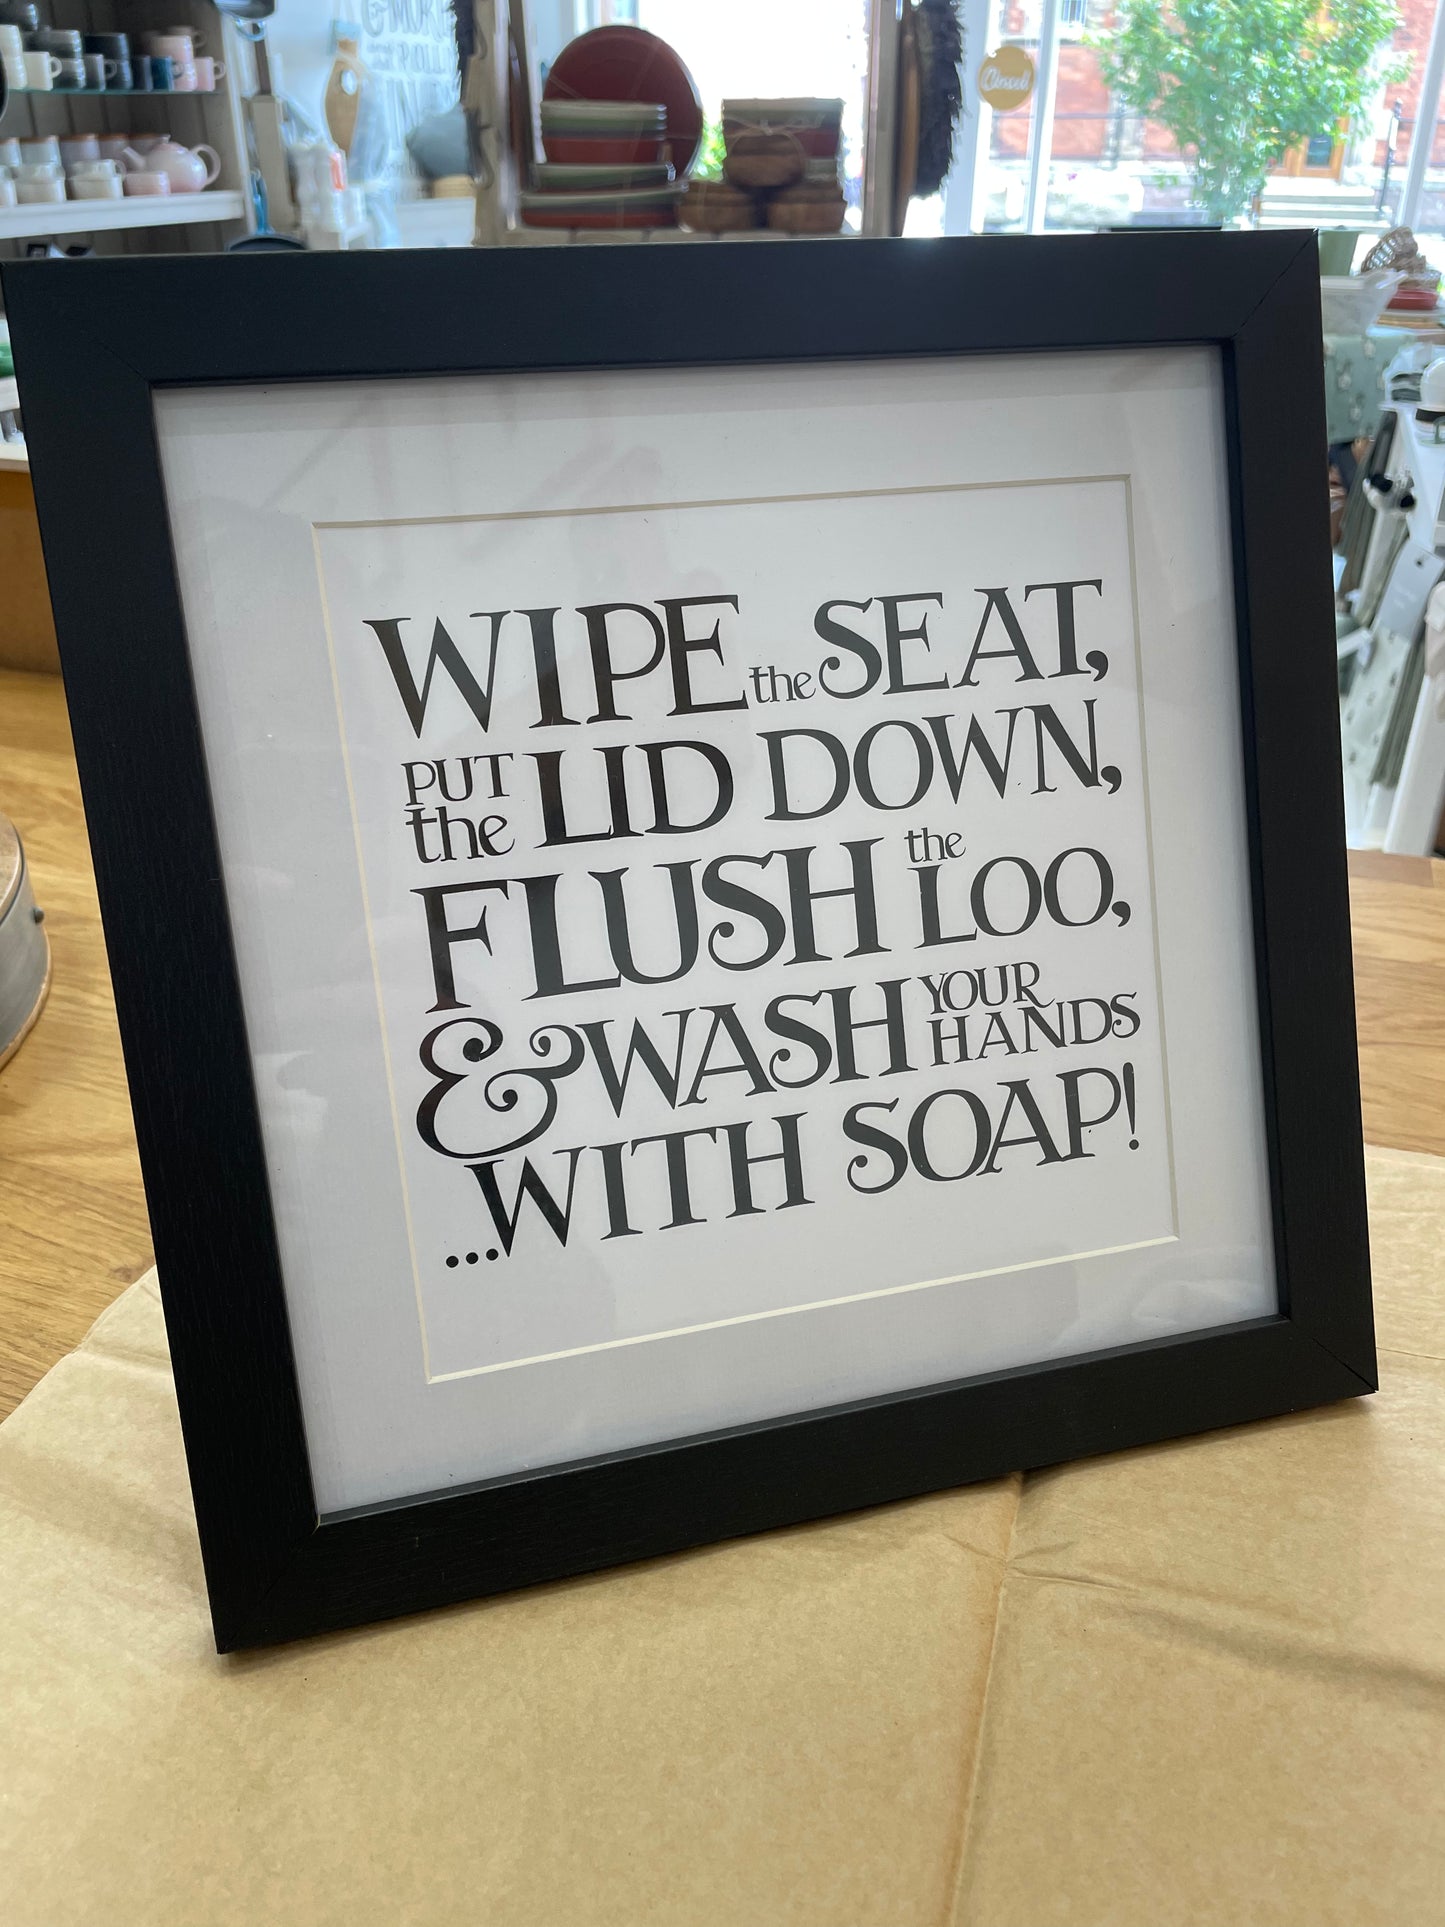 Framed Phrase Prints - Black Toast - Wipe, Flush, lid down